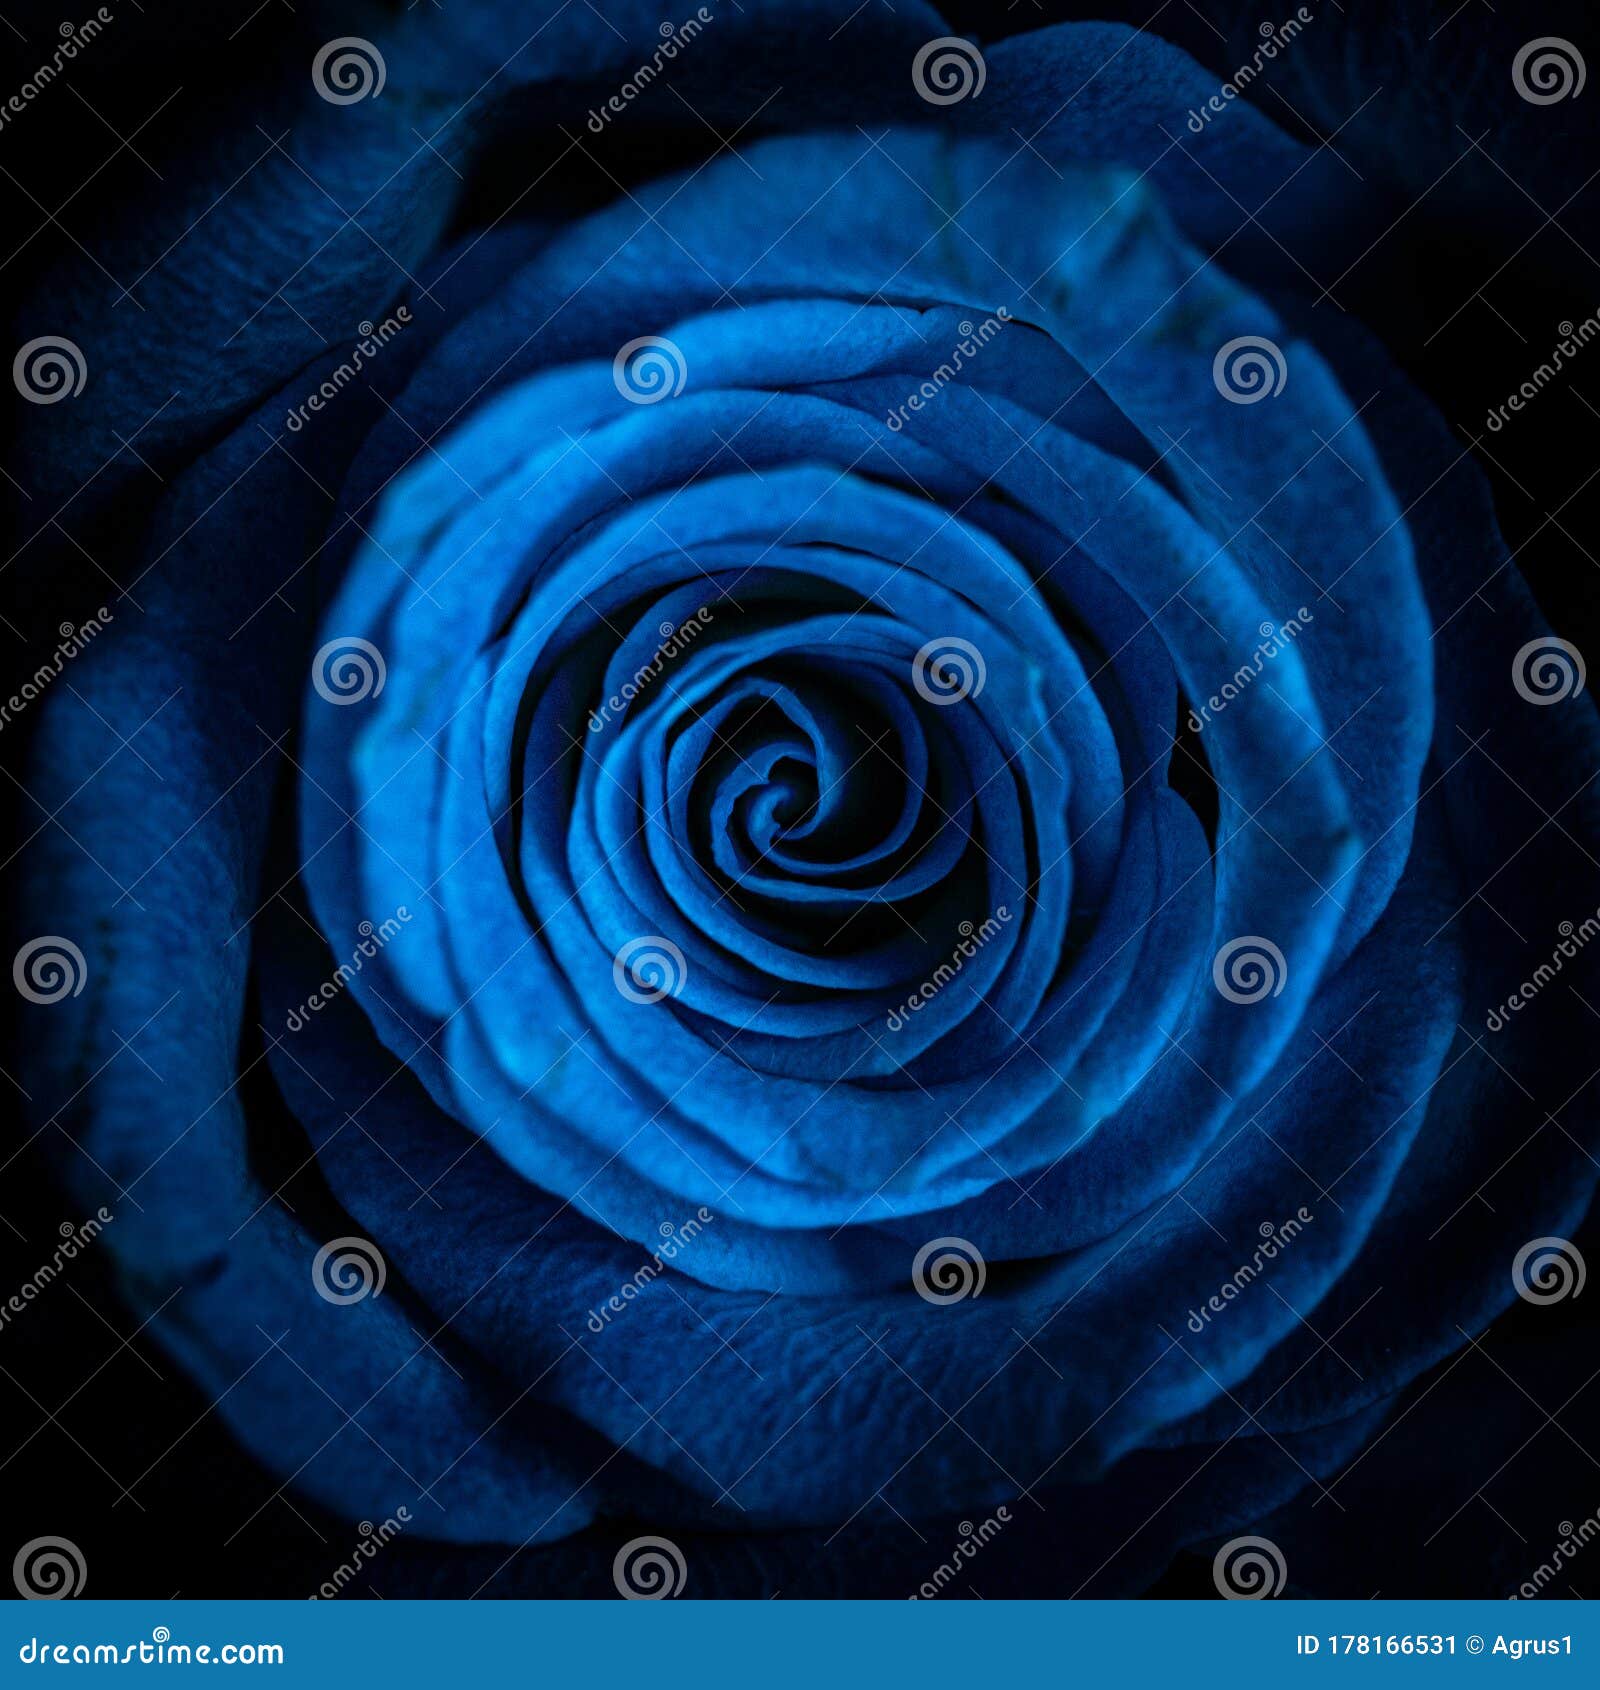 Blue Rose on Black Background Stock Image - Image of valentine